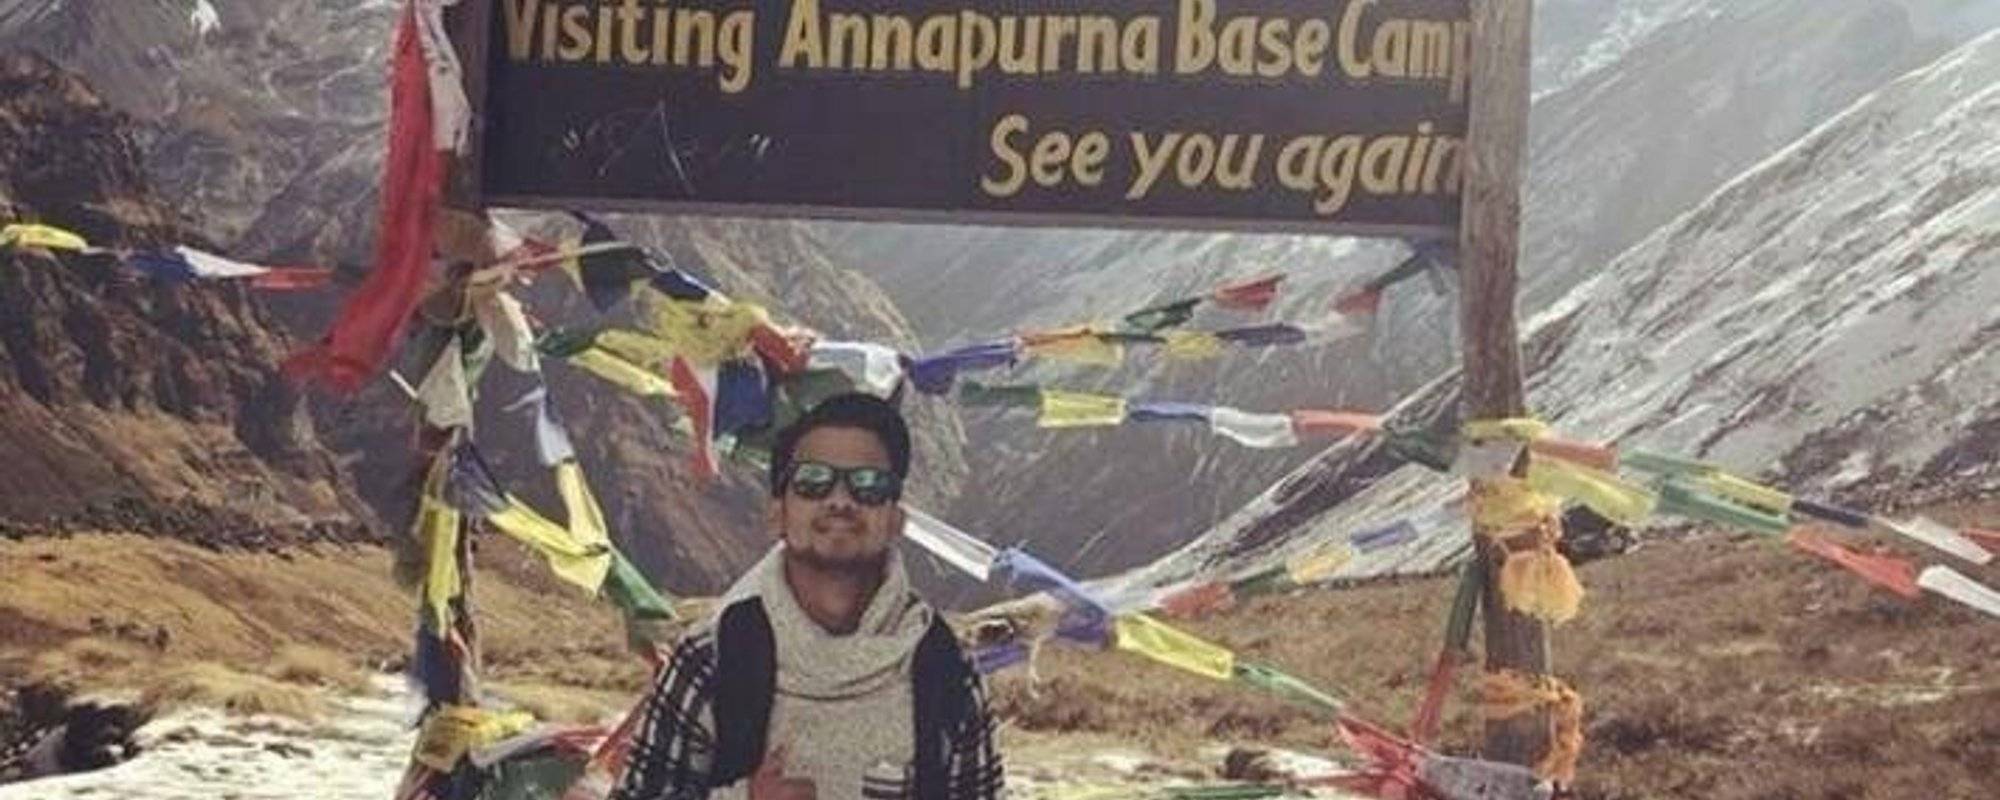 Annapurna Base Camp, Nepal (4130m  above the sea level) - Short Blog